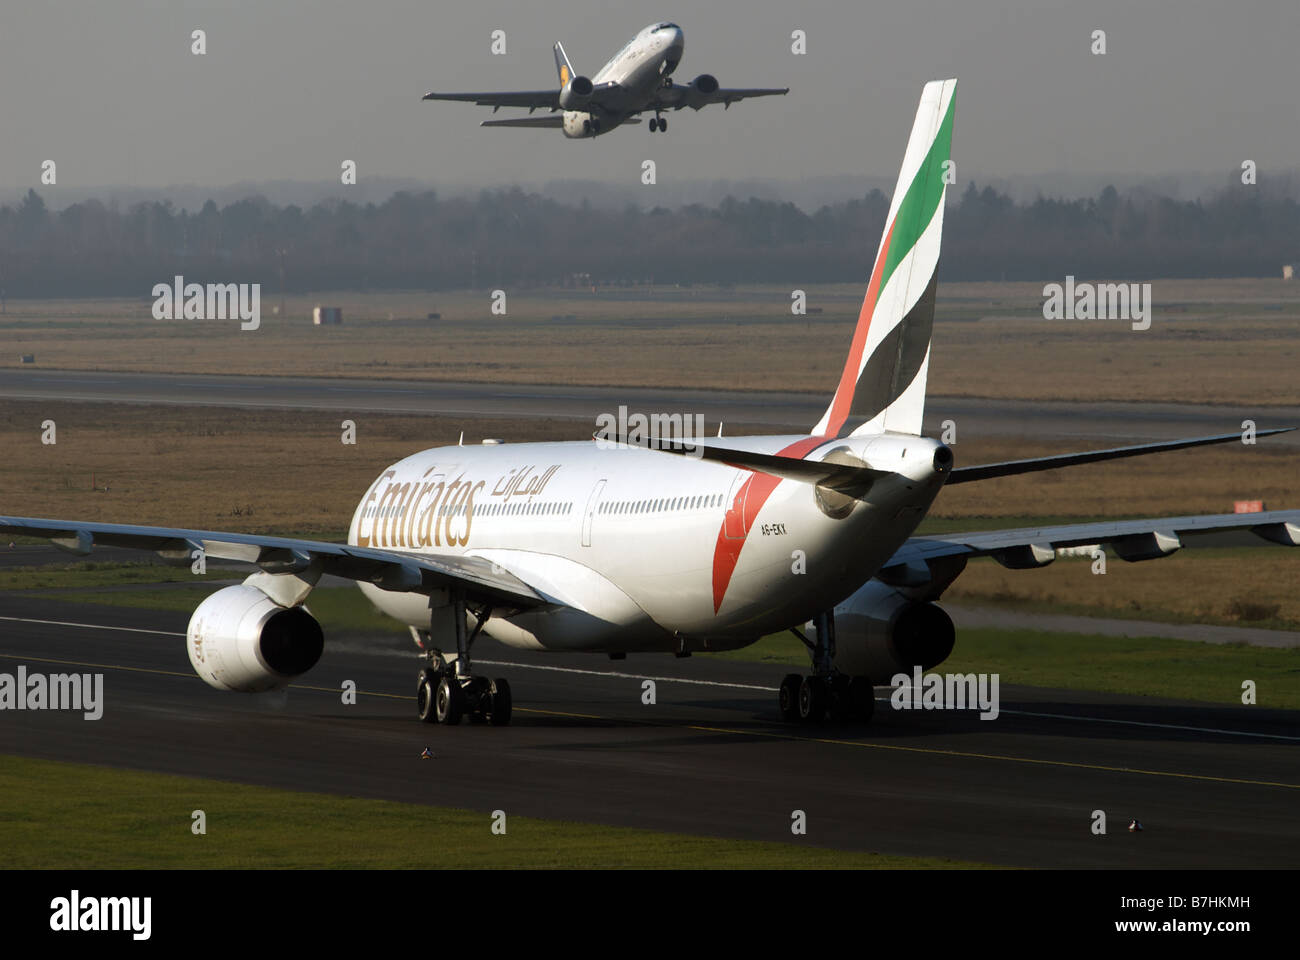 Emirates Airways Airbus A330-200 passenger airliner and Lufthansa Boeing 737, Dusseldorf International Airport, Germany. Stock Photo